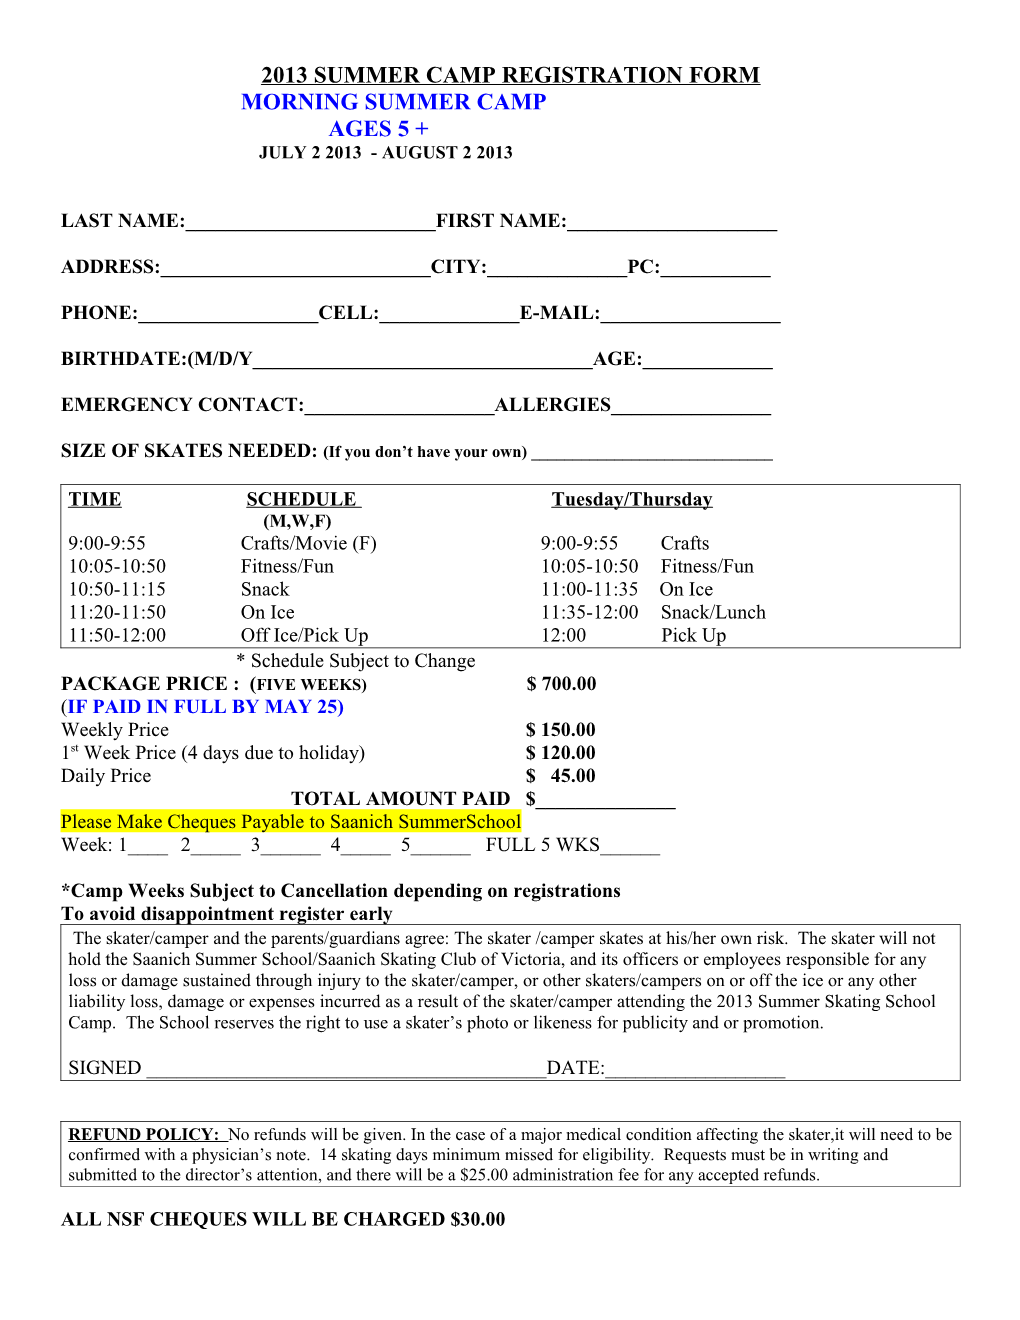 2013 Summerschool Registration Form